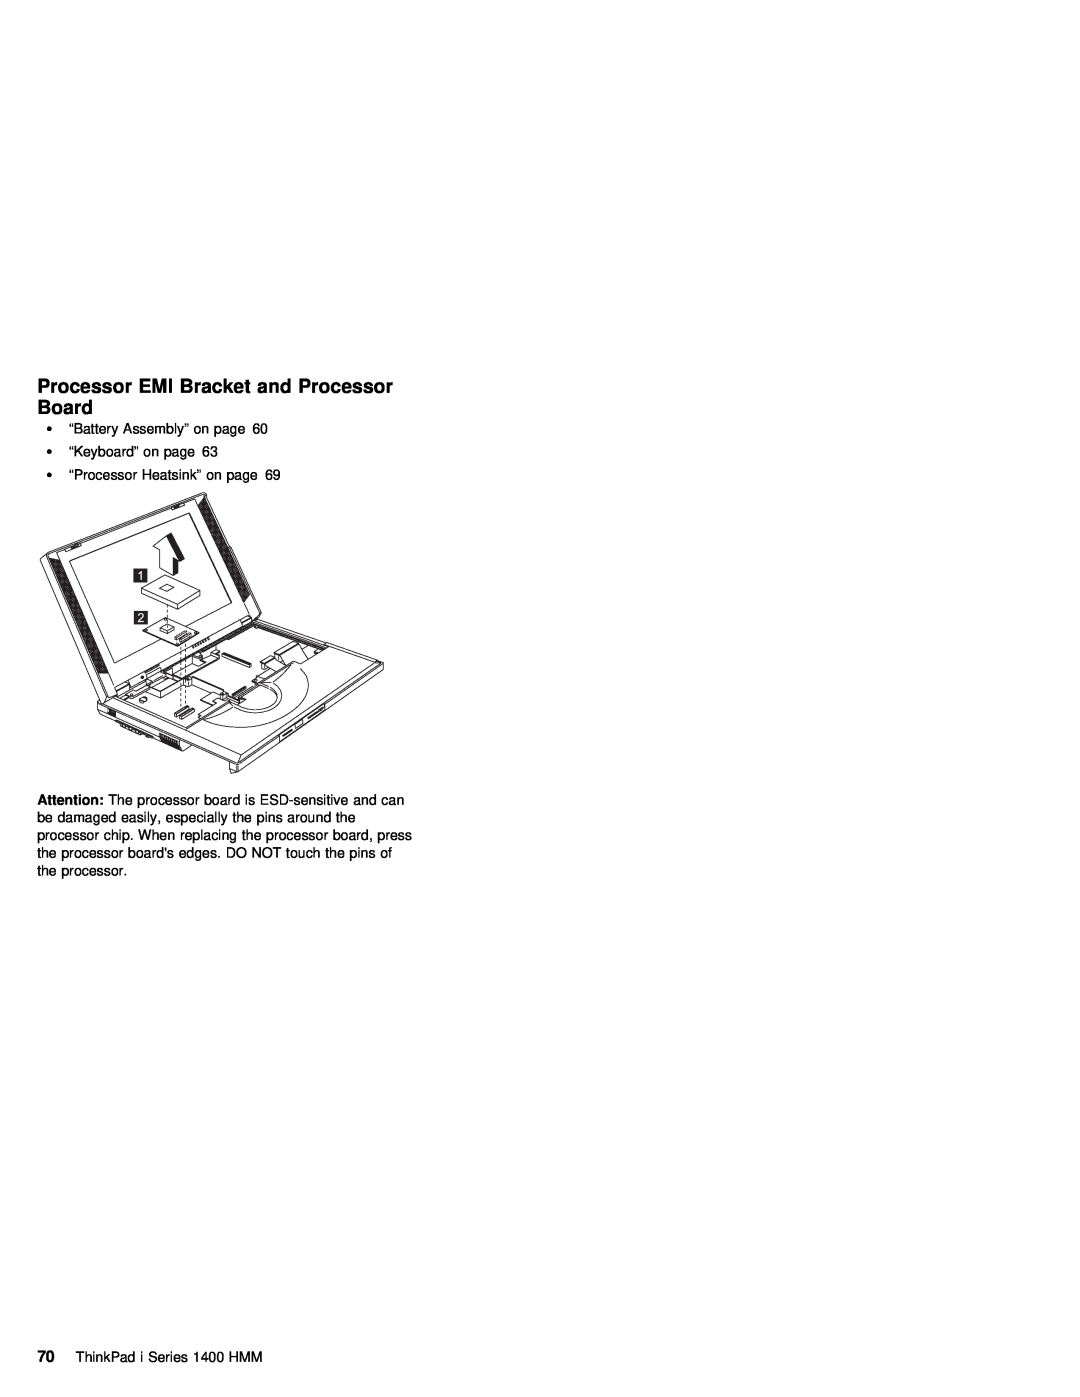 IBM 1400 (2611) manual Processor EMI Bracket and Processor Board, Ÿ “Battery Assembly” on page Ÿ “Keyboard” on page 